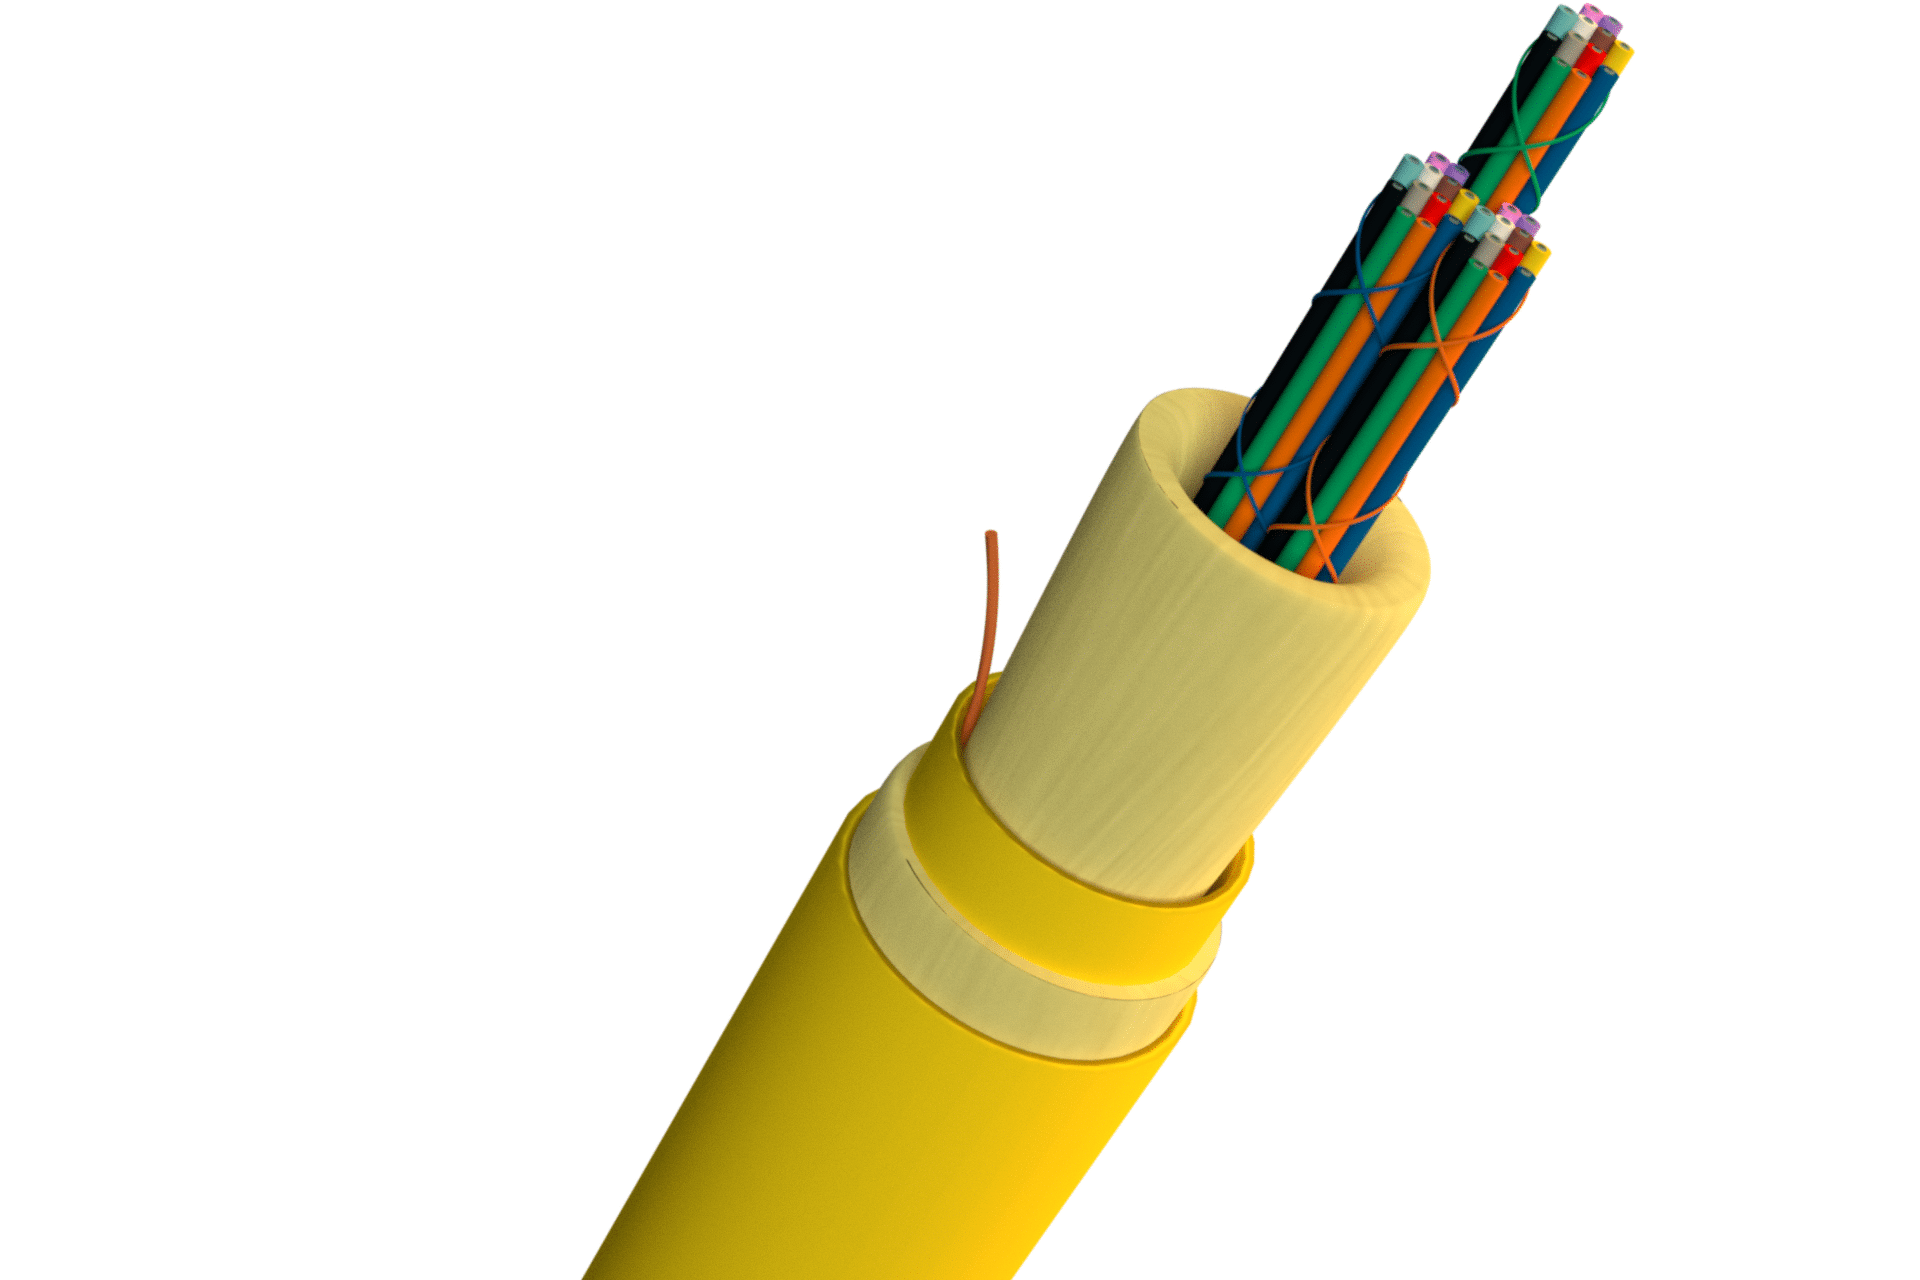 Cable Management - AFL Hyperscale